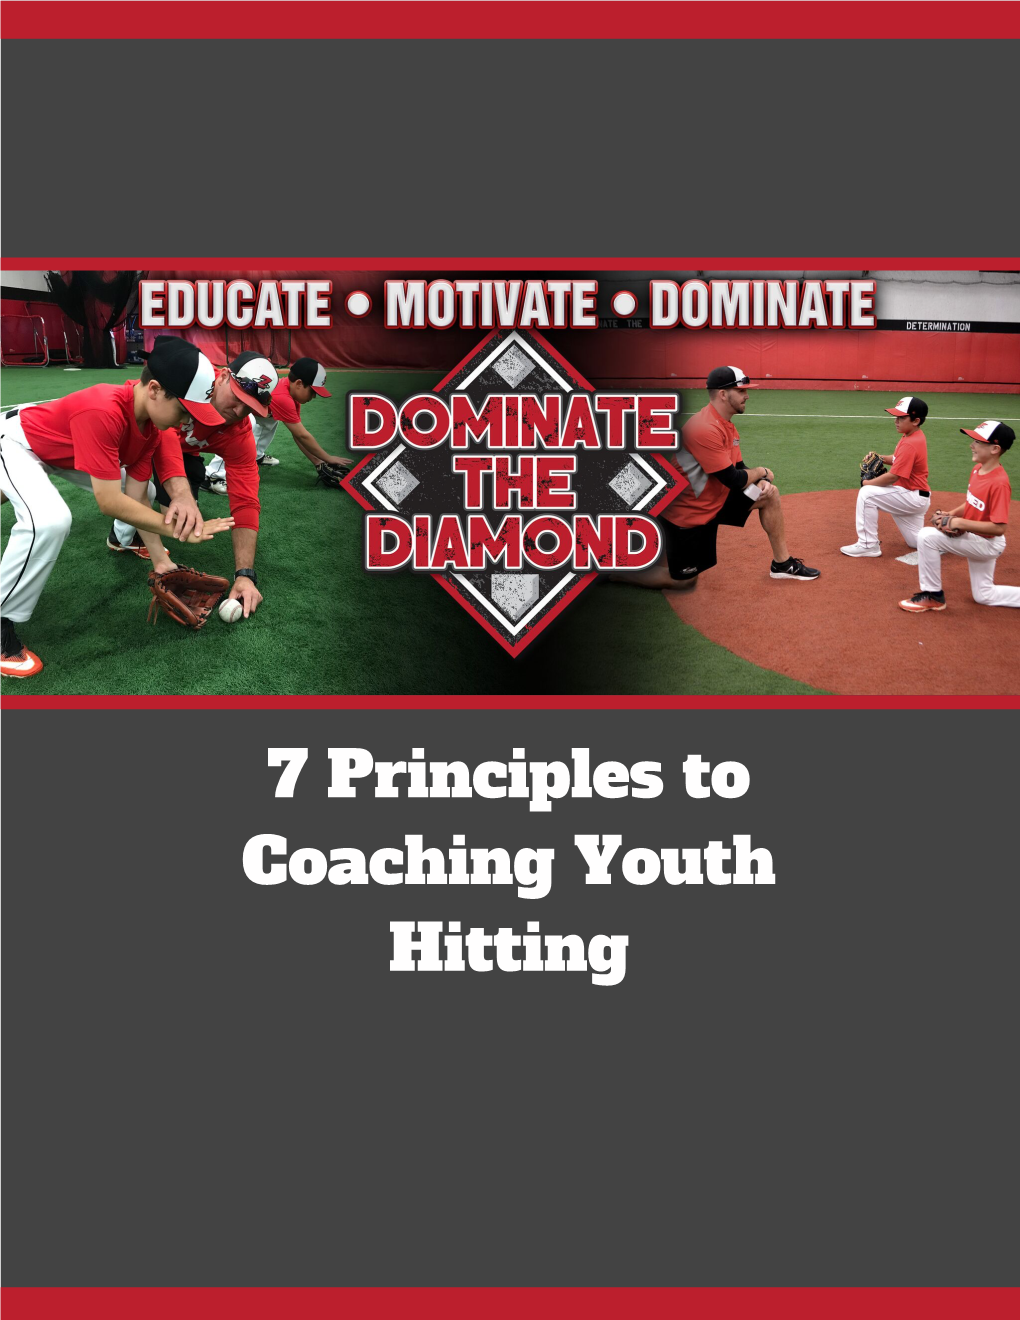 7 Principles to Coaching Youth Hitting ® Hitting Philosophy